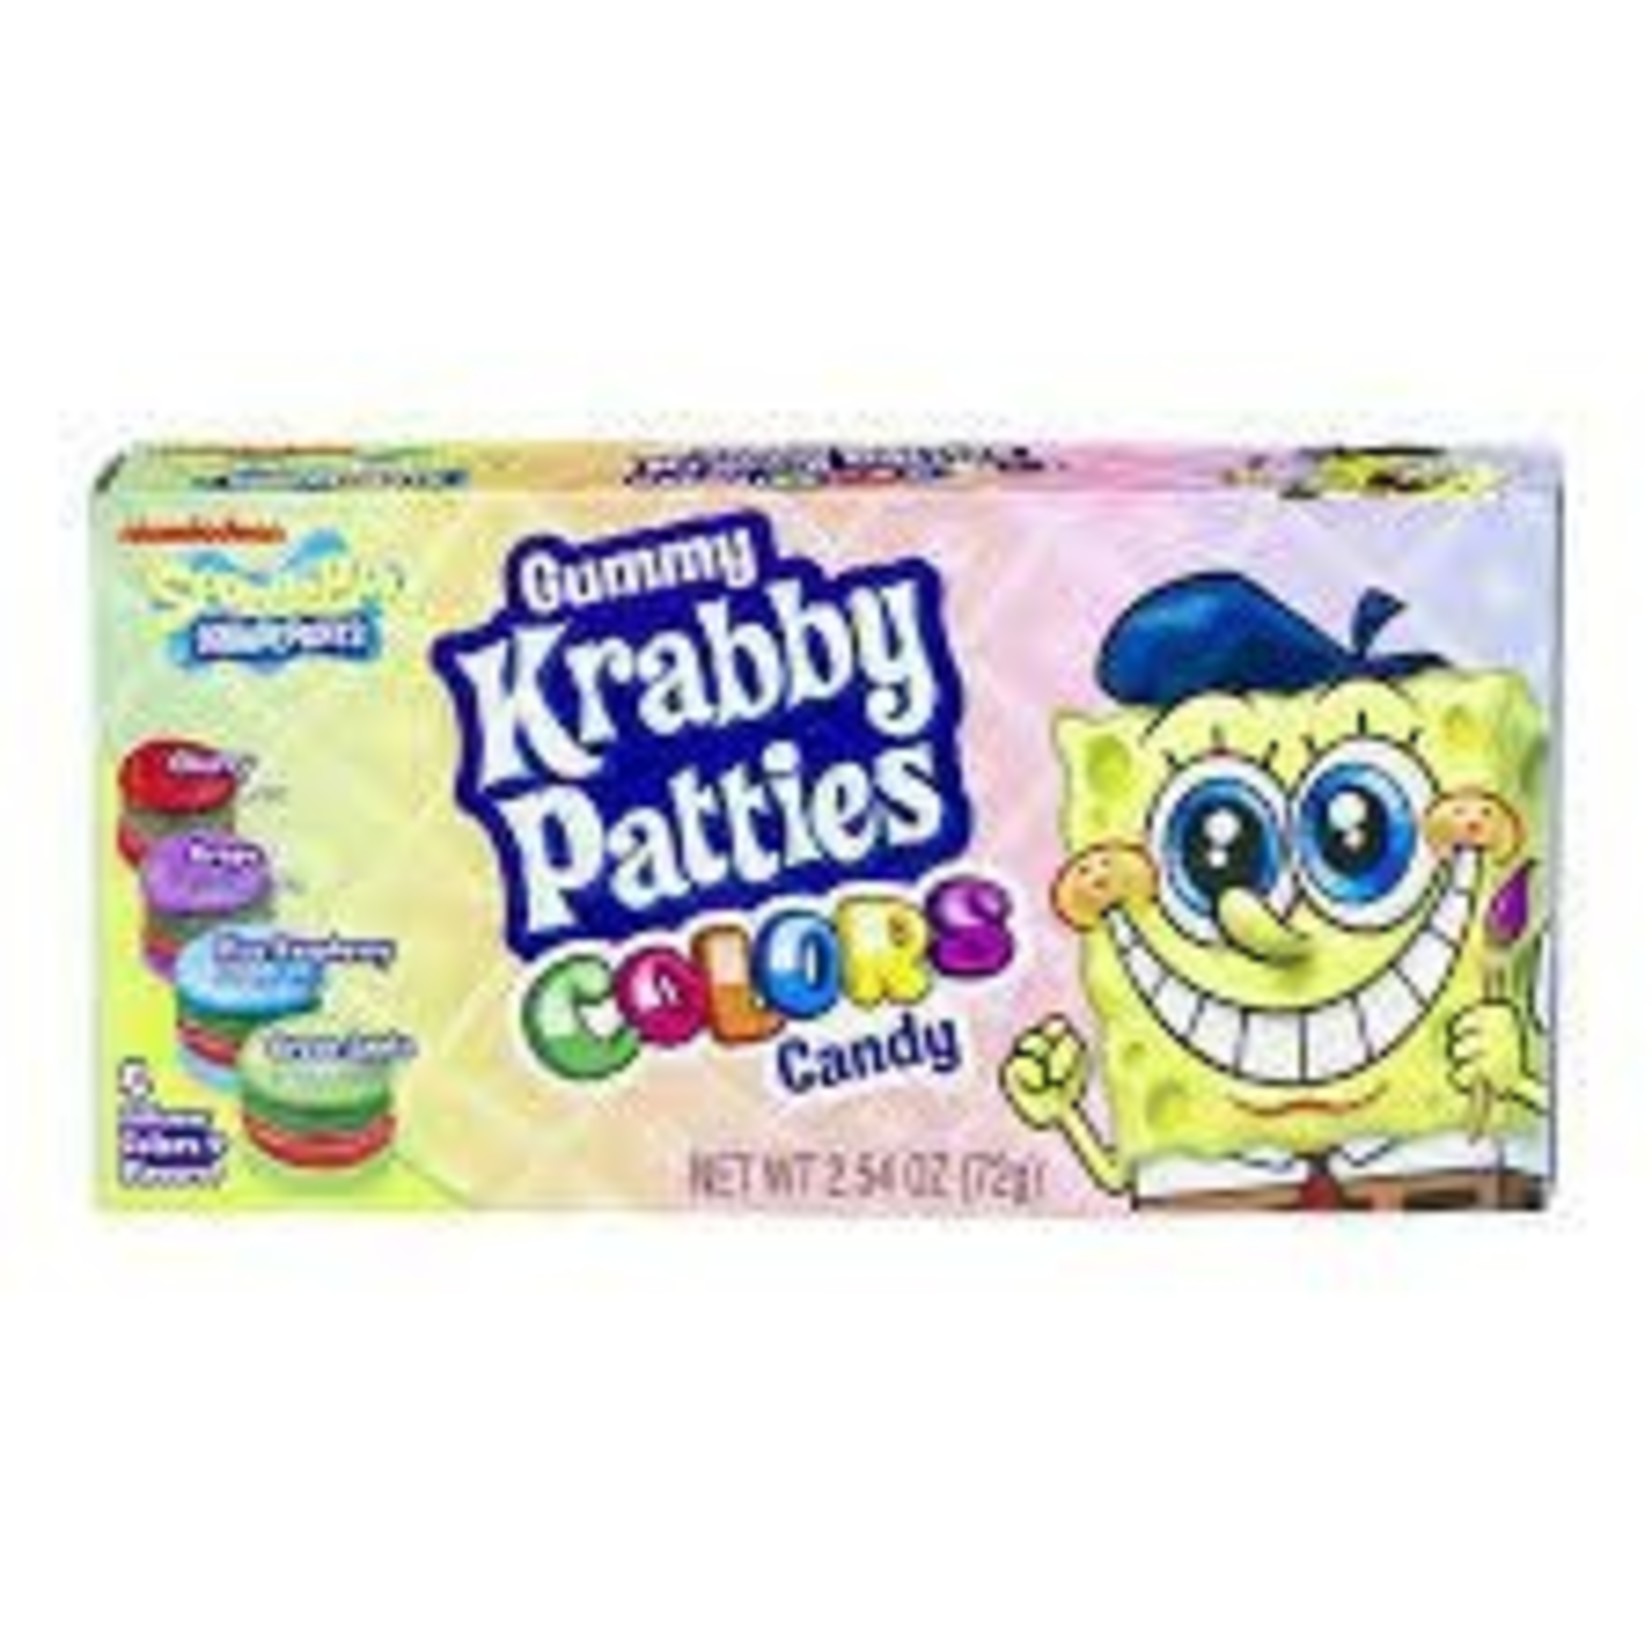 Krabby Patties Colors